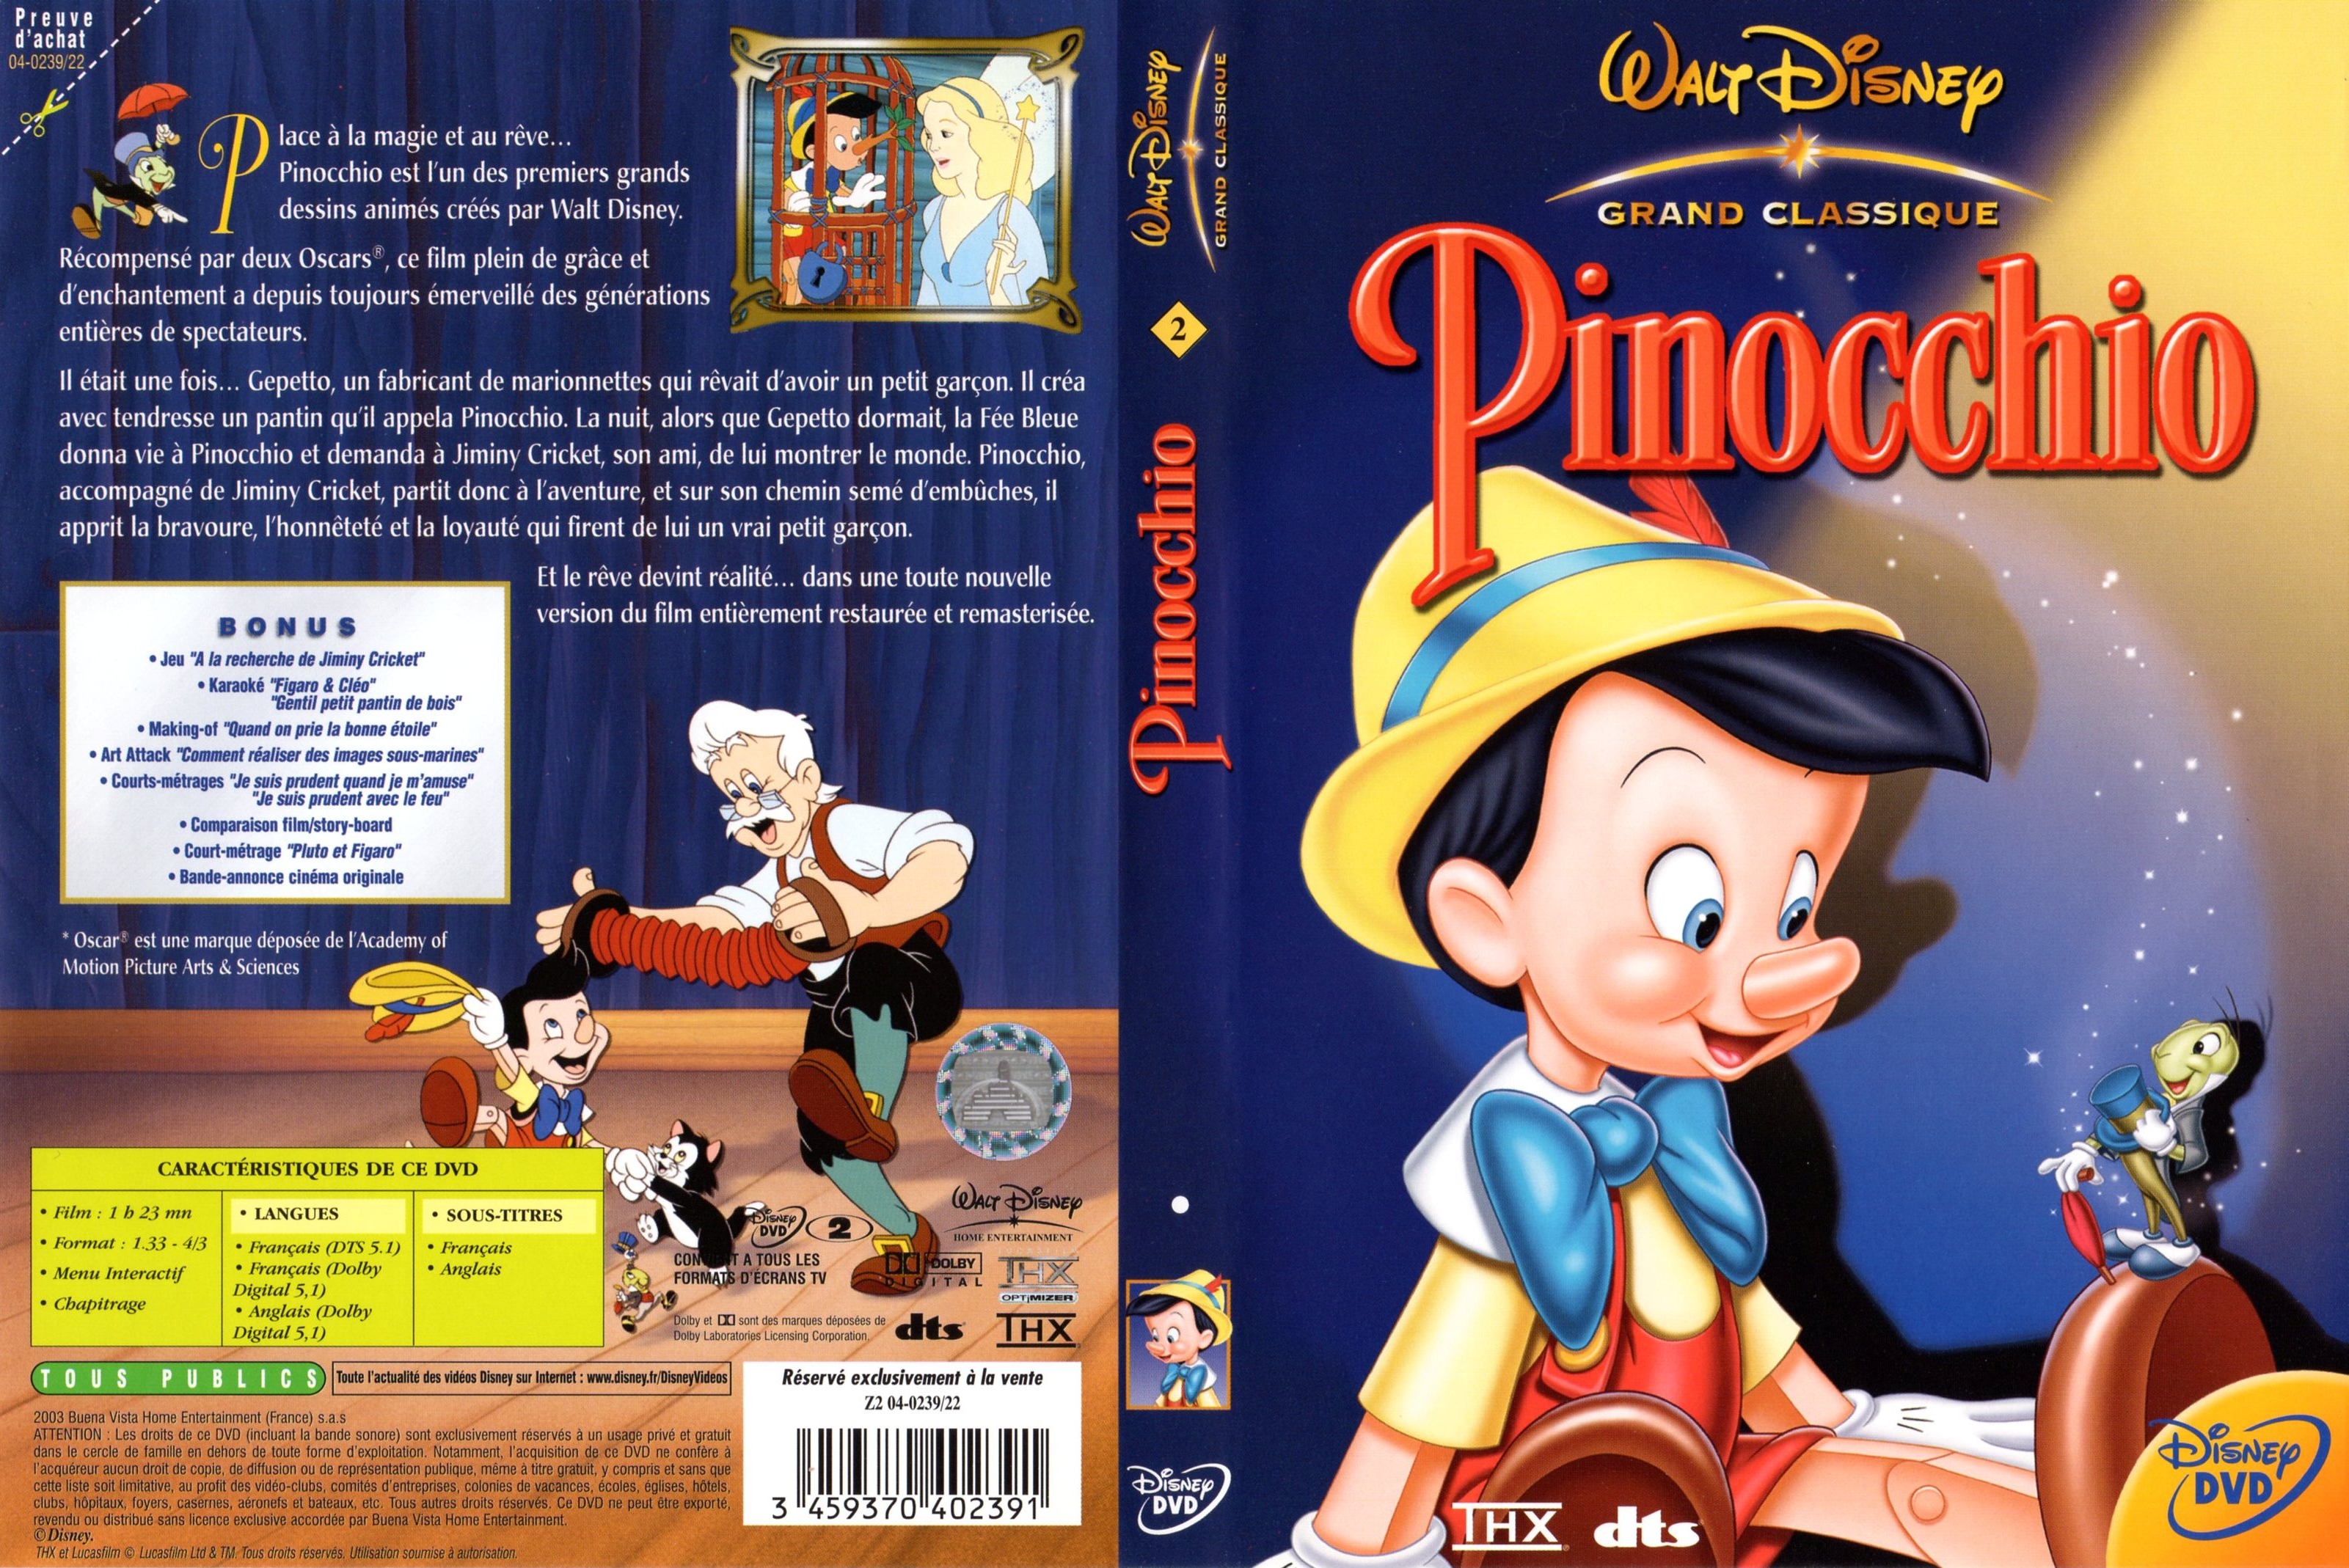 Jaquette DVD Pinocchio